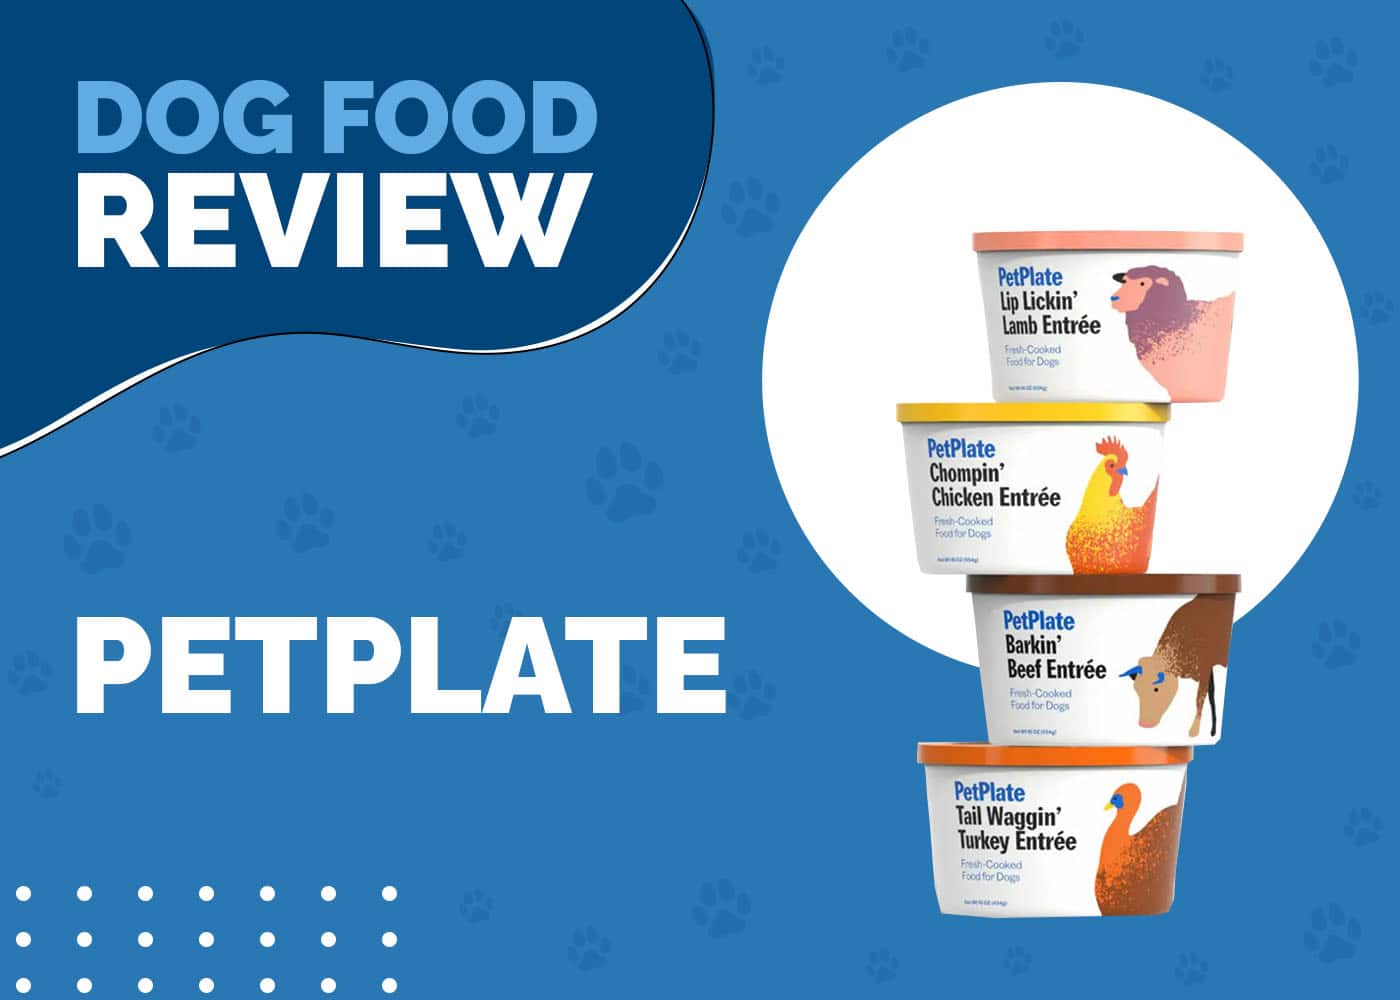 PetPlate Dog Food Review